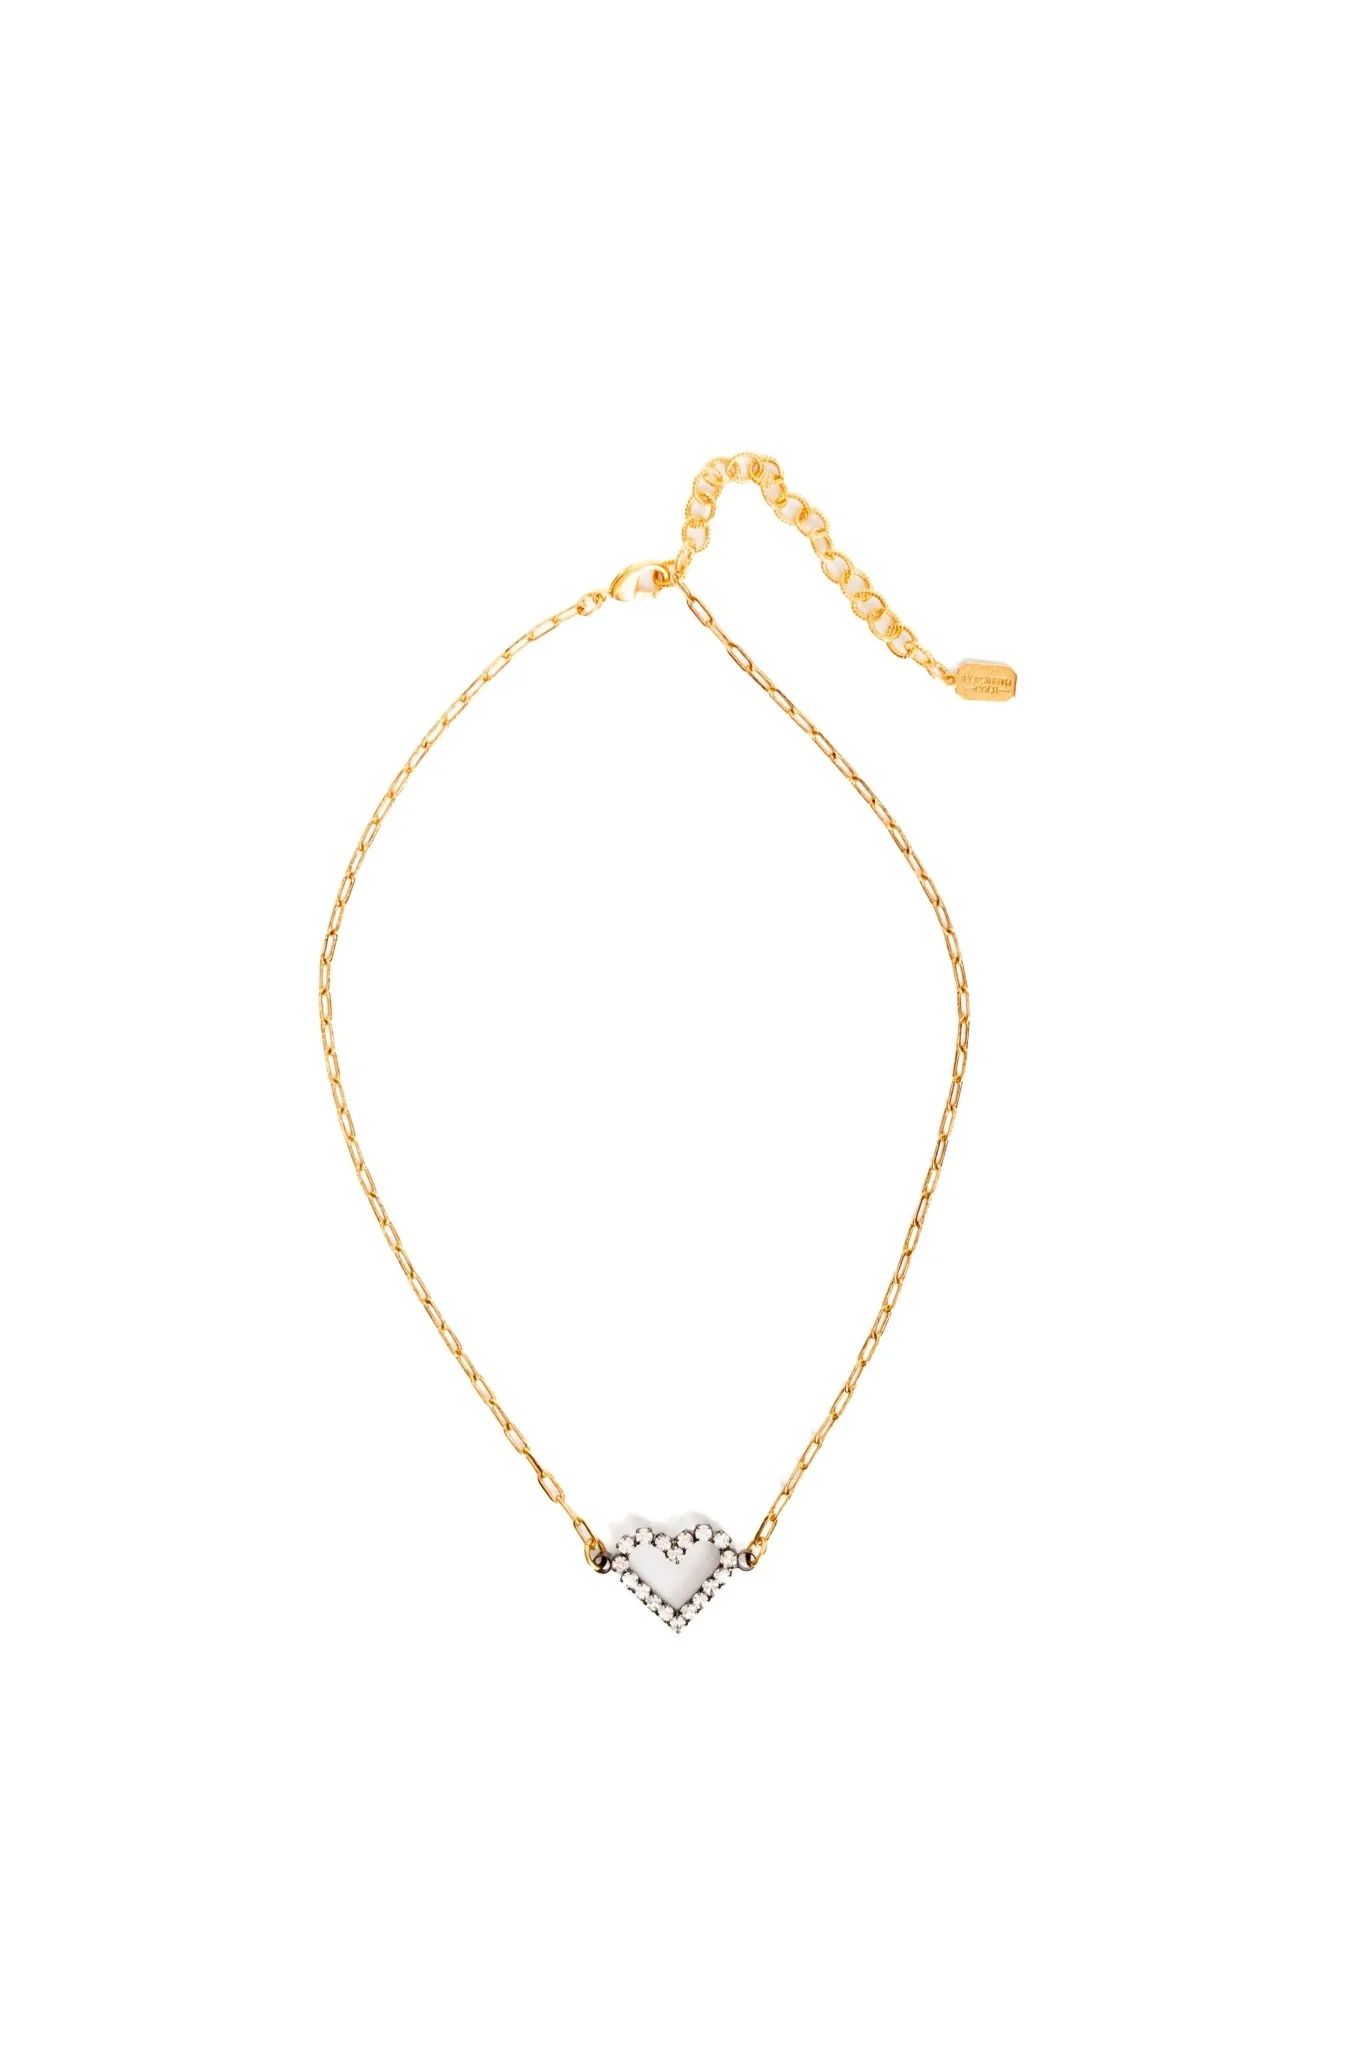 Lovelace Necklace | Elizabeth Cole Jewelry